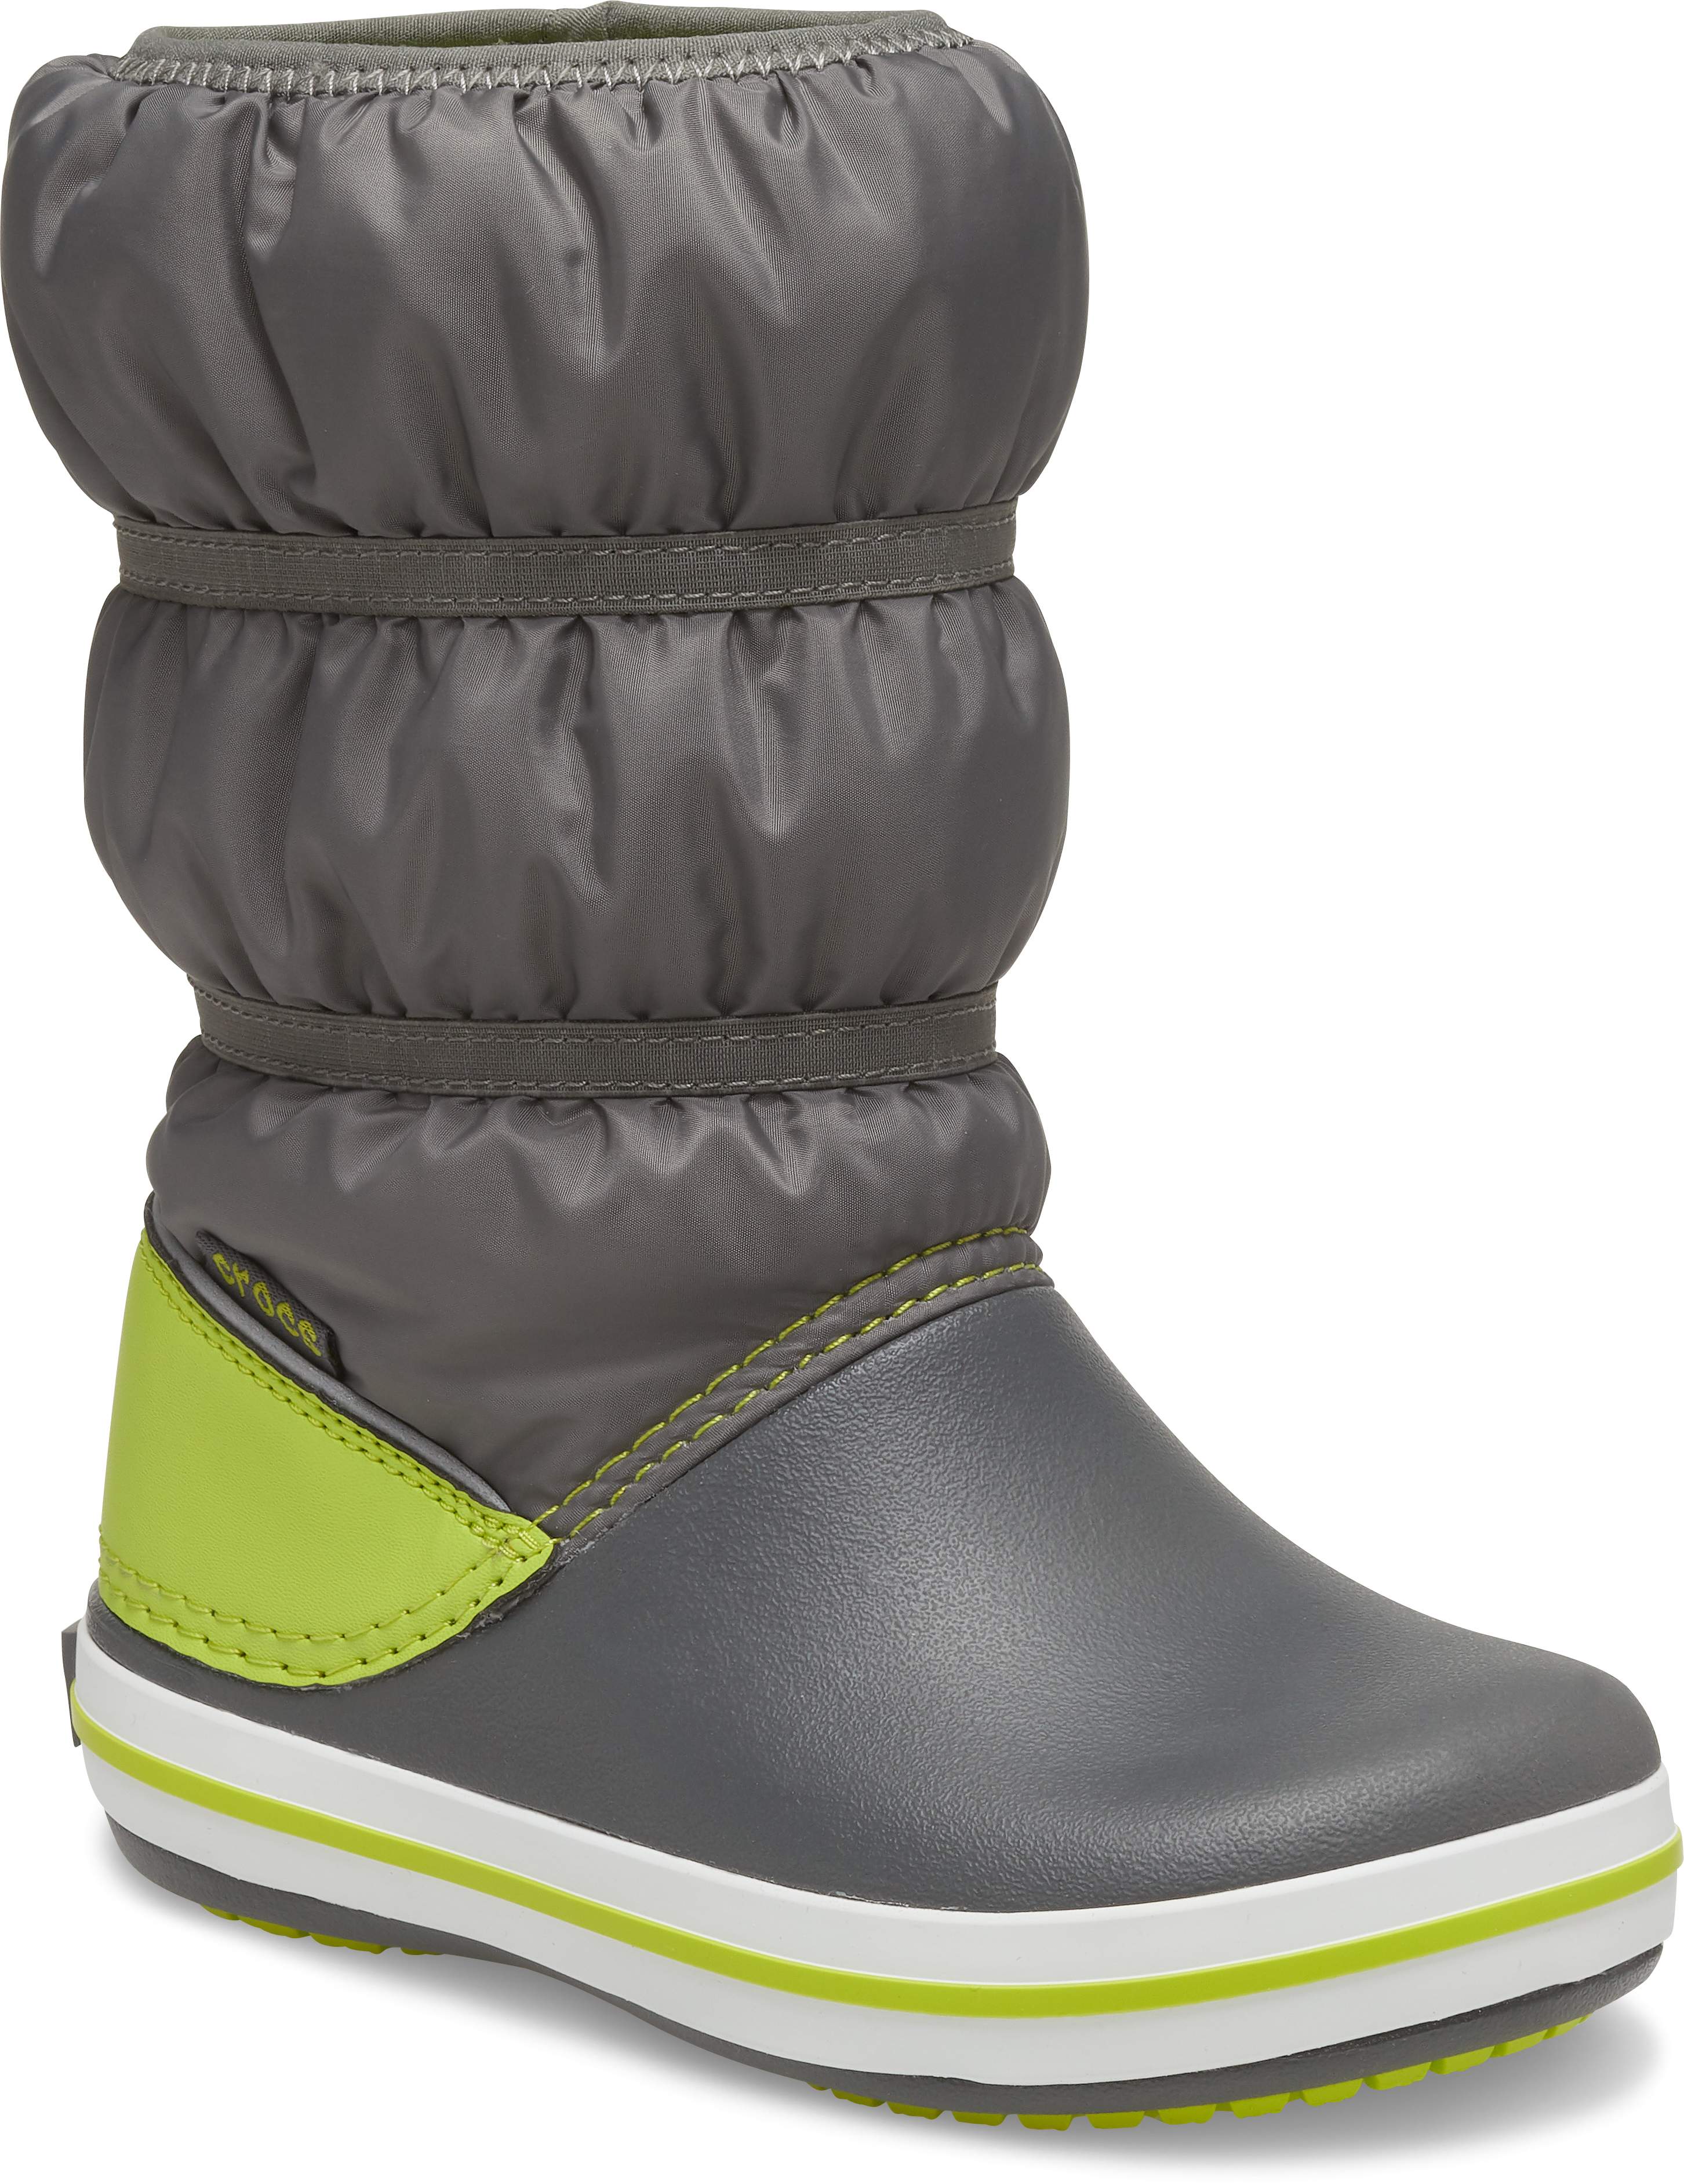 crocs warm boots